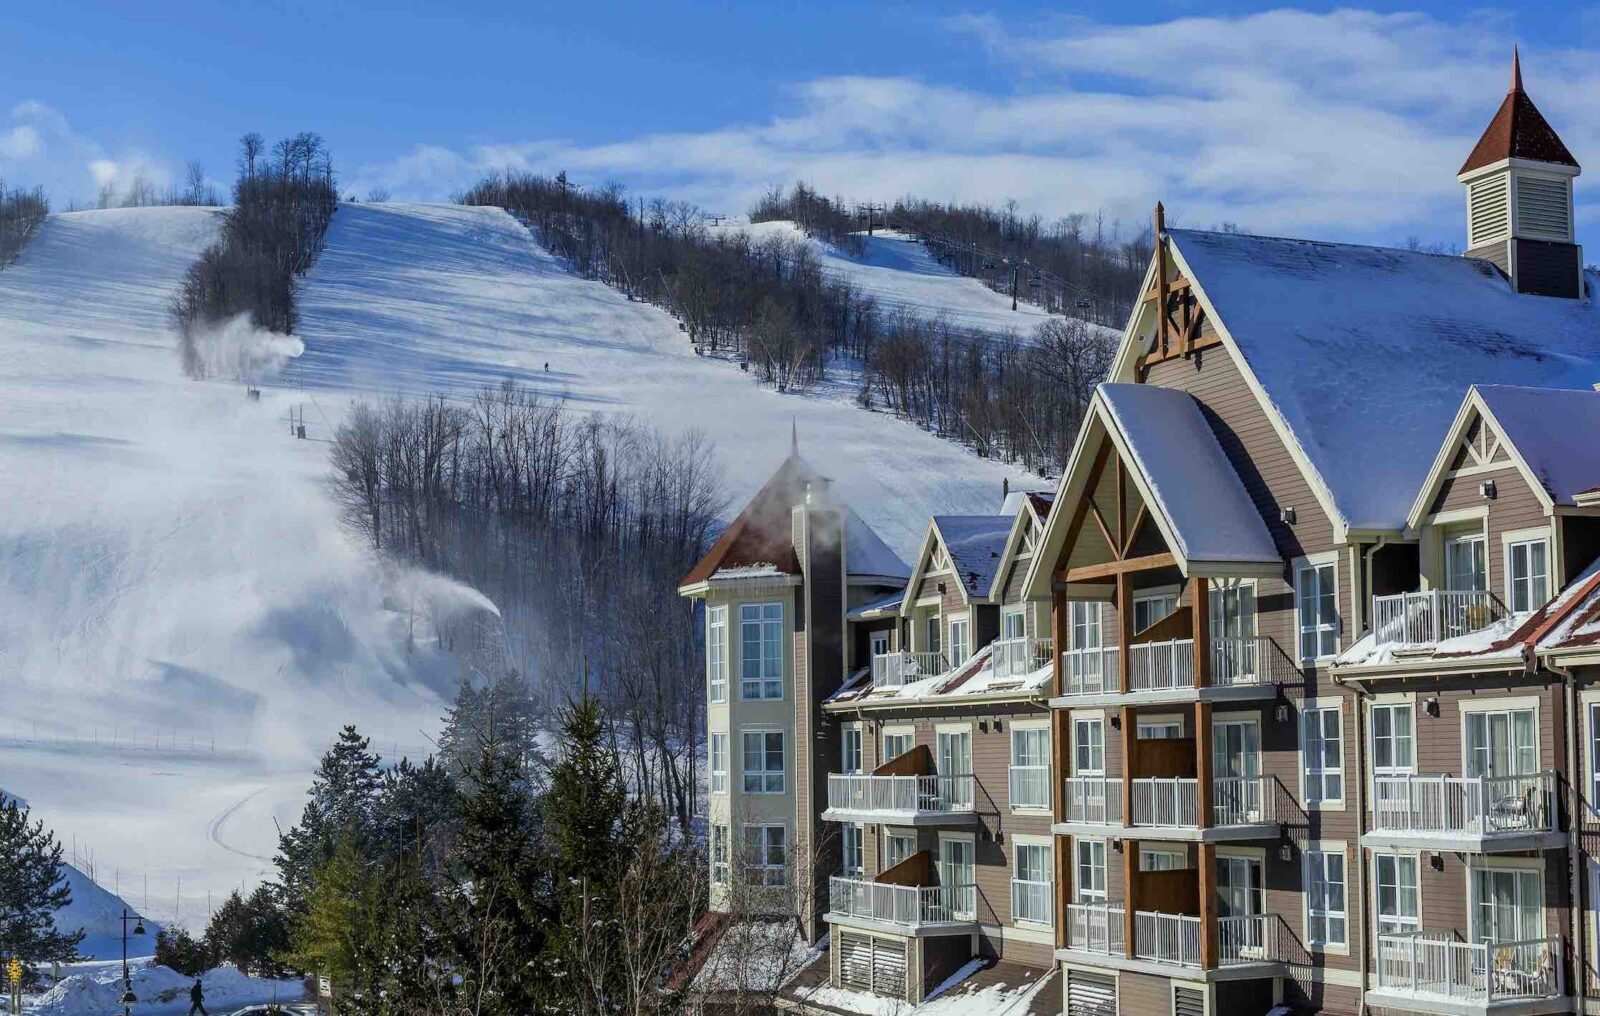 shutterstock_555831967-MasterPhoto - Blue Mountain Resort skiing hills in daylight